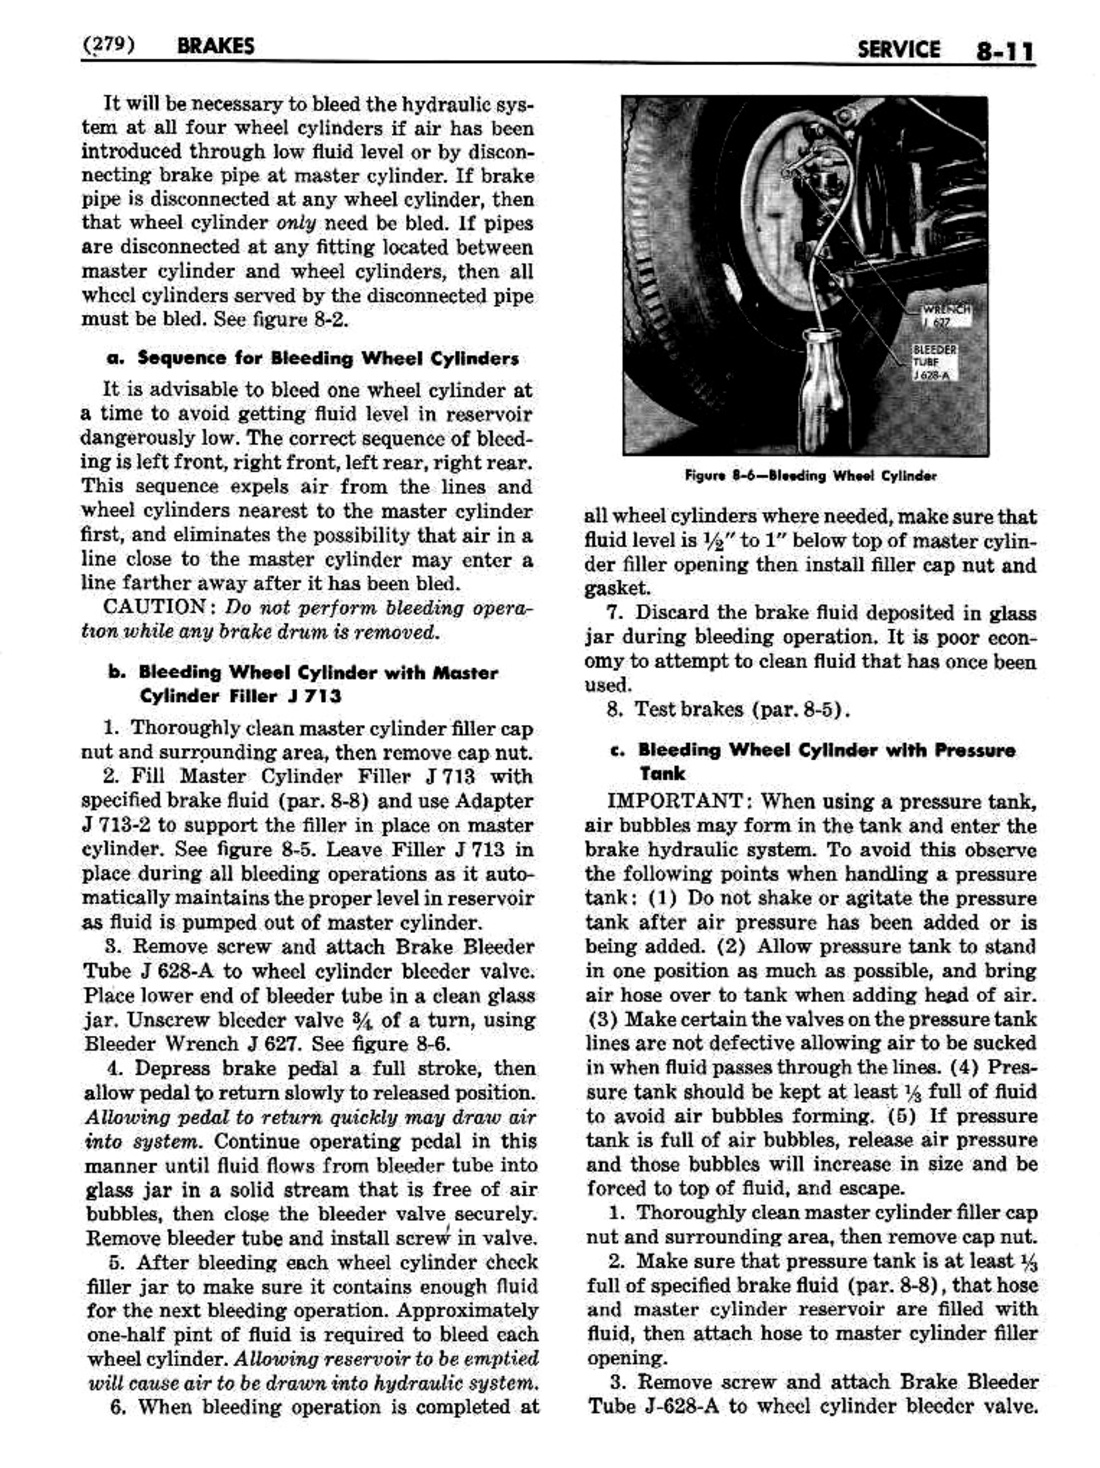 n_09 1951 Buick Shop Manual - Brakes-011-011.jpg